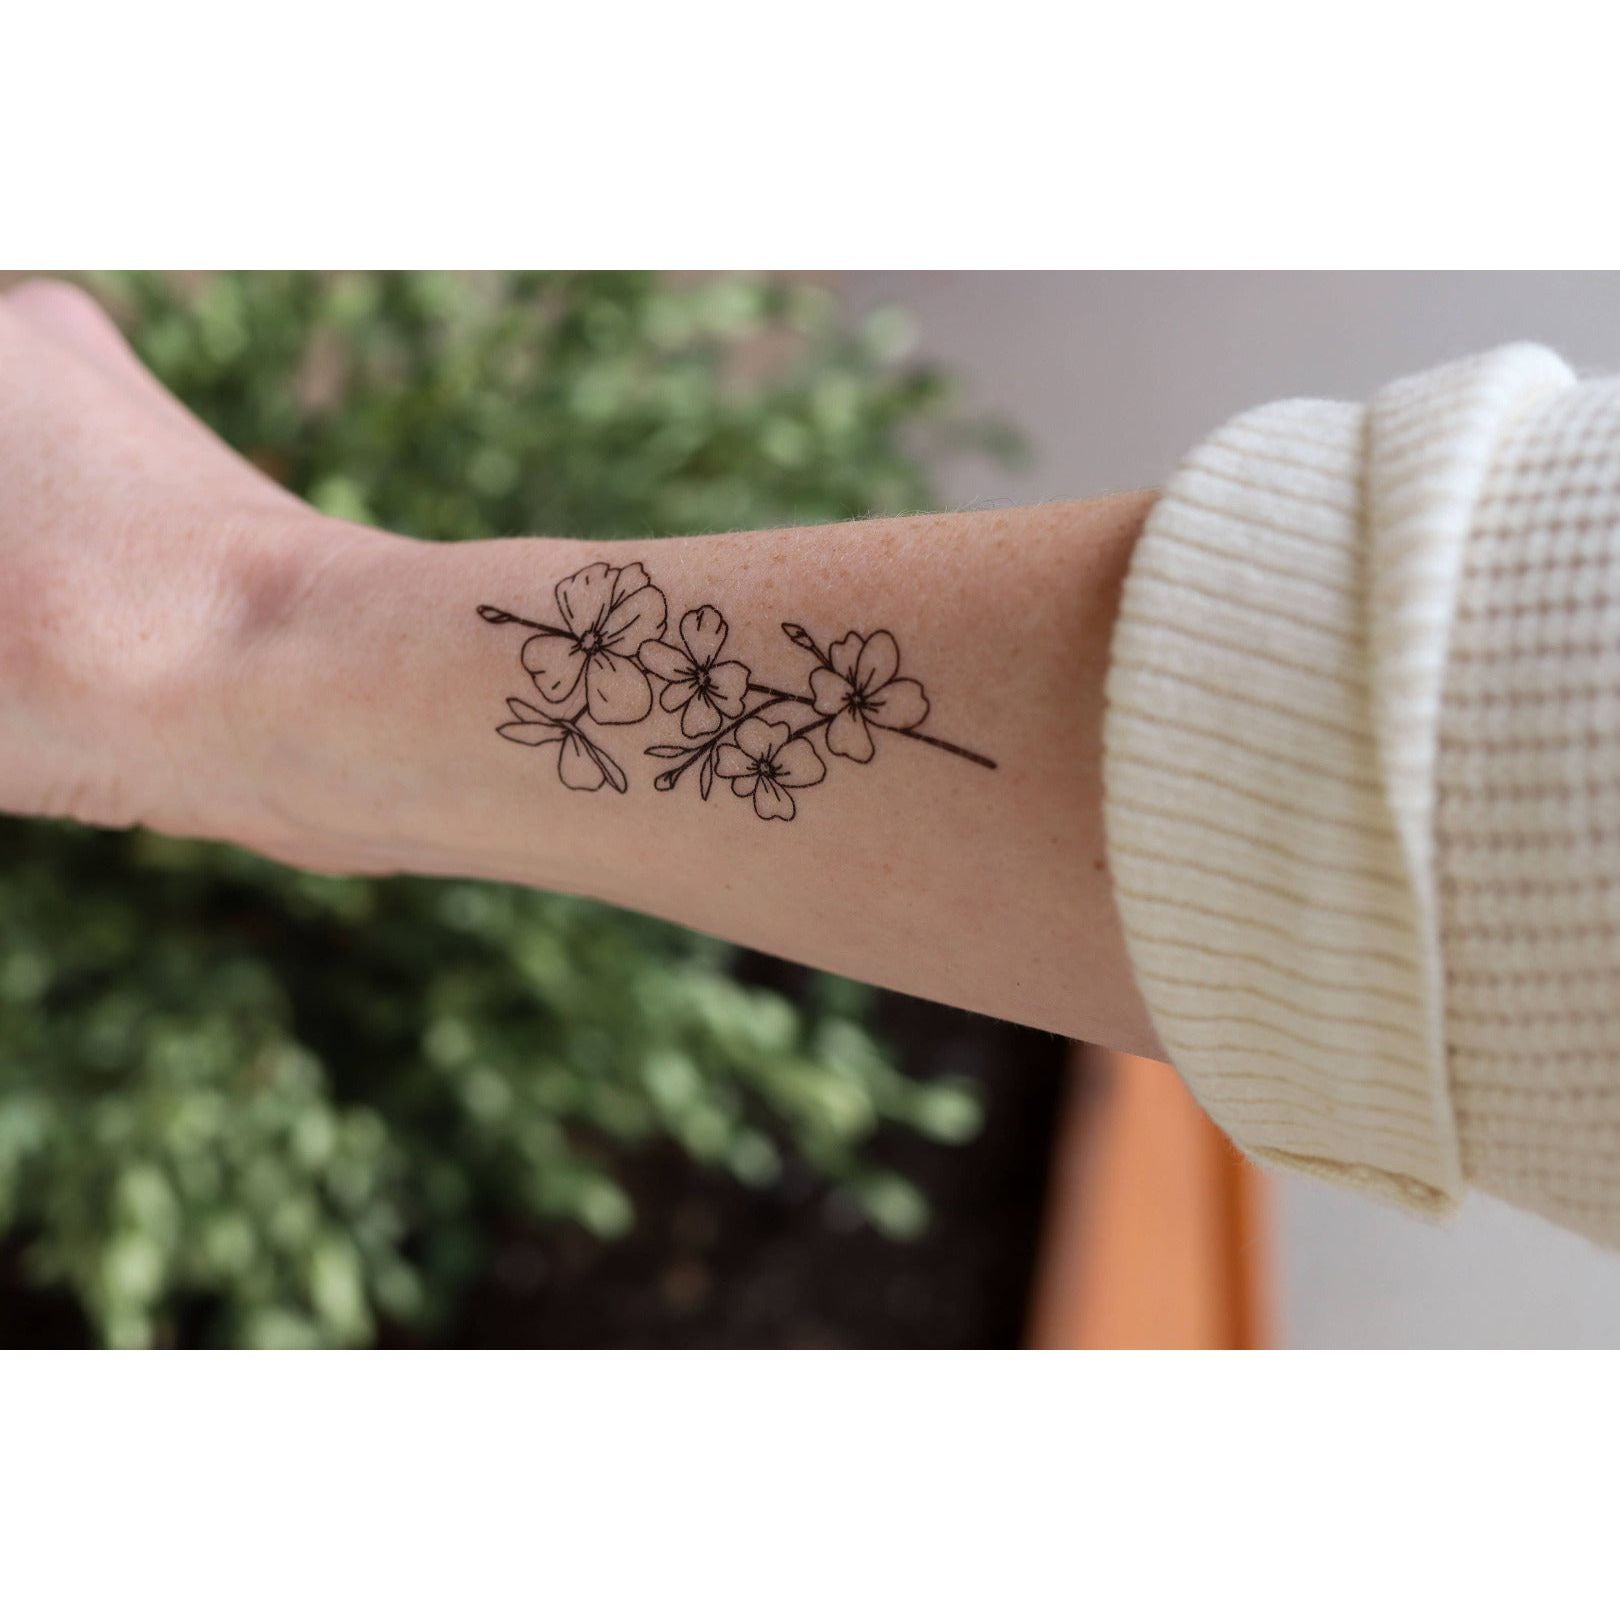 Tattoo uploaded by Tattoodo • Cherry blossom tattoo by Bium Tattoo  #BiumTattoo #cherryblossomtattoos #cherryblossom #flowers #floral #nature # plant #cherryblossomtattoo #illustrative #dragon #japanese #fire #petals  #redink • Tattoodo